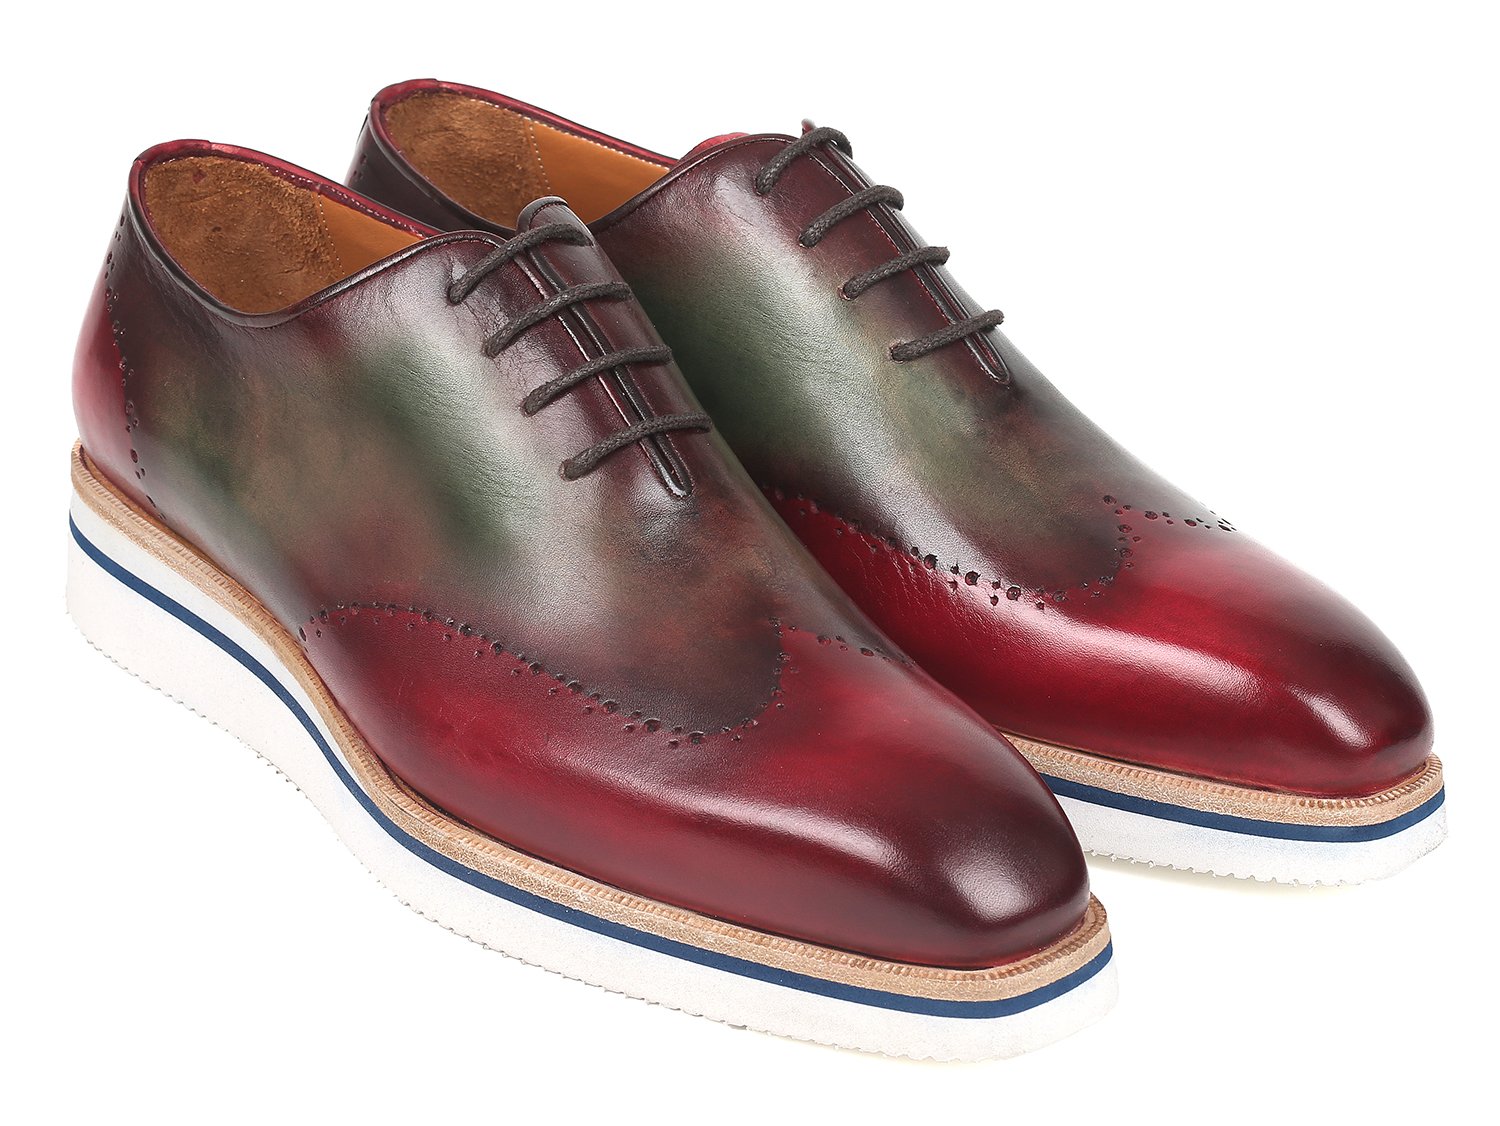 Paul Parkman "187-BRD-GRN" Bordeaux / Green Genuine Calfskin Casual Wingtip Oxfords Shoes .